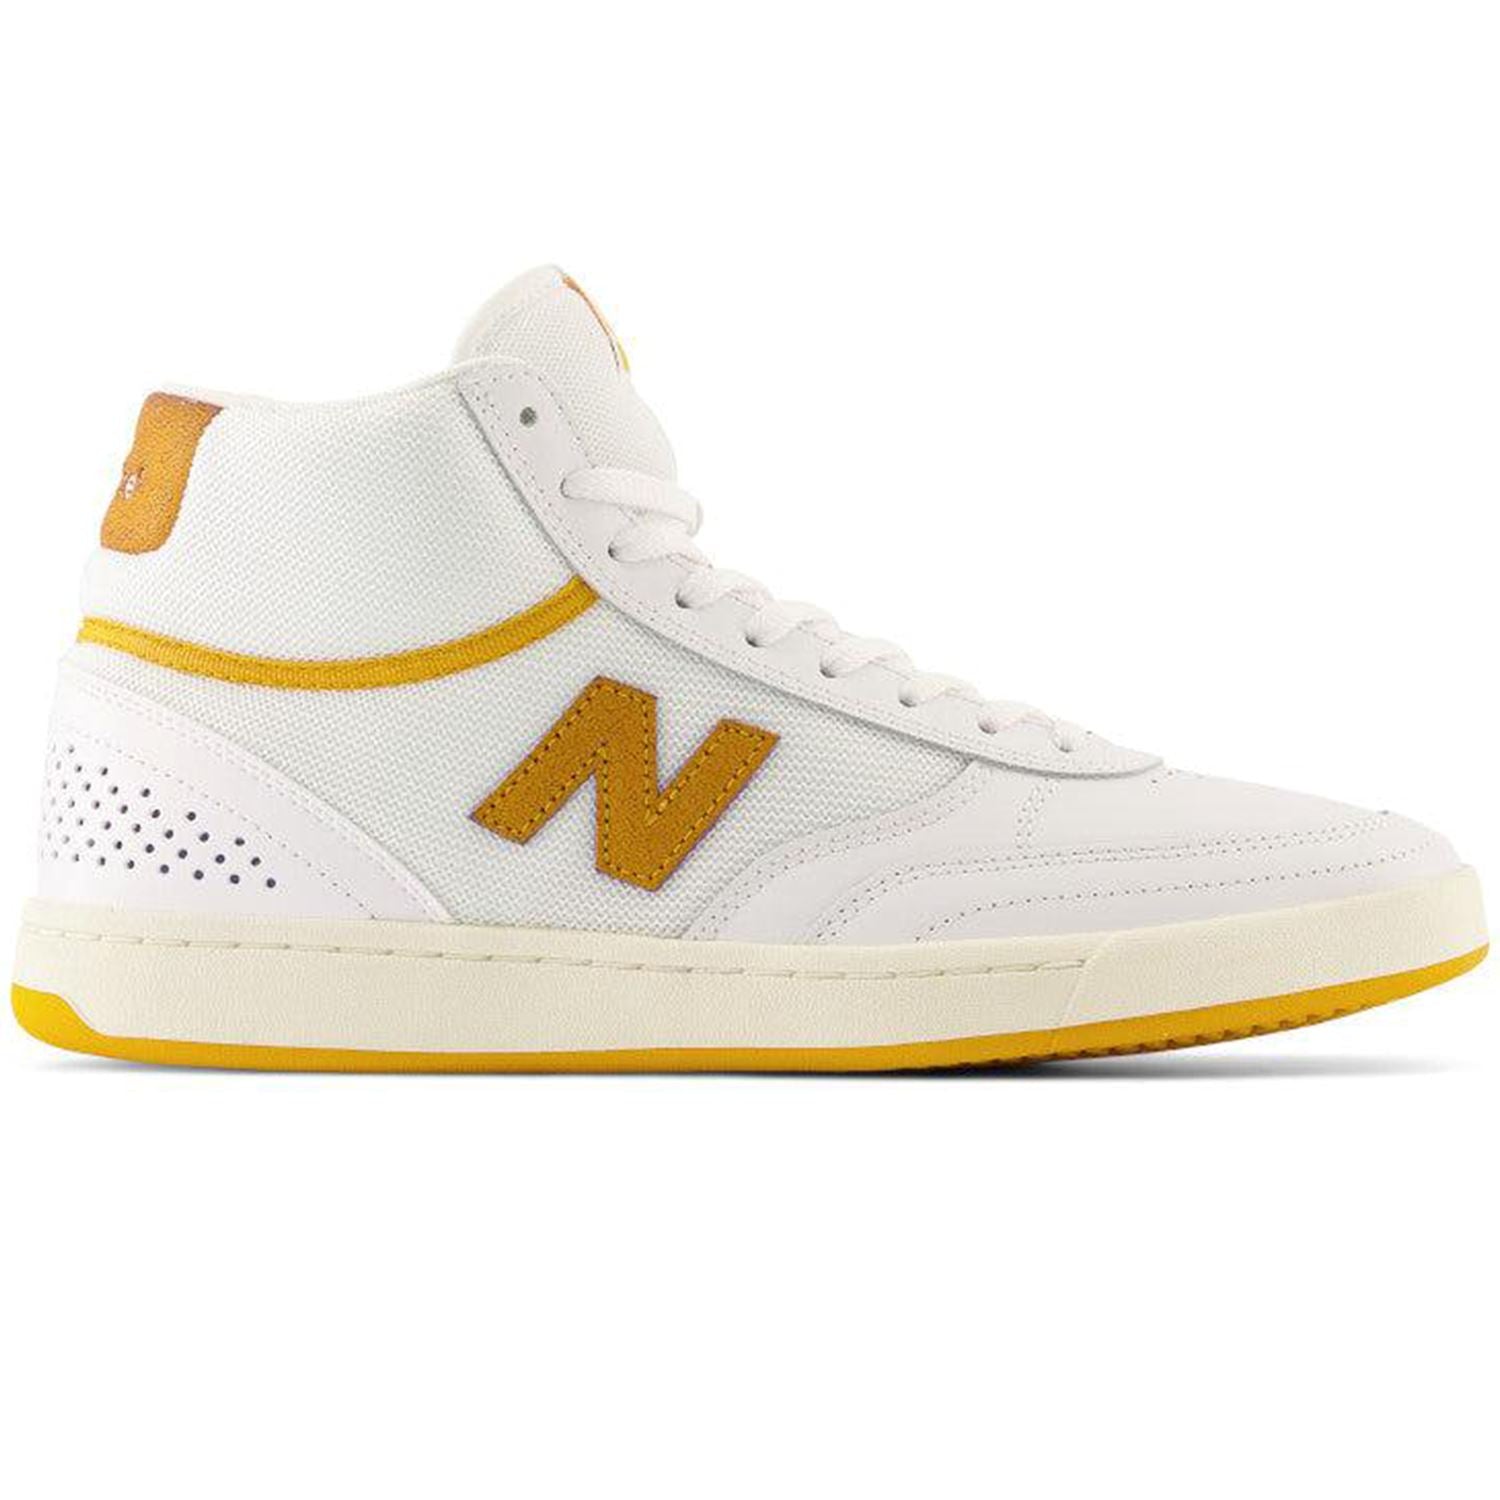 New Balance Numeric NM440 High White/Yellow footwear New Balance Numeric 